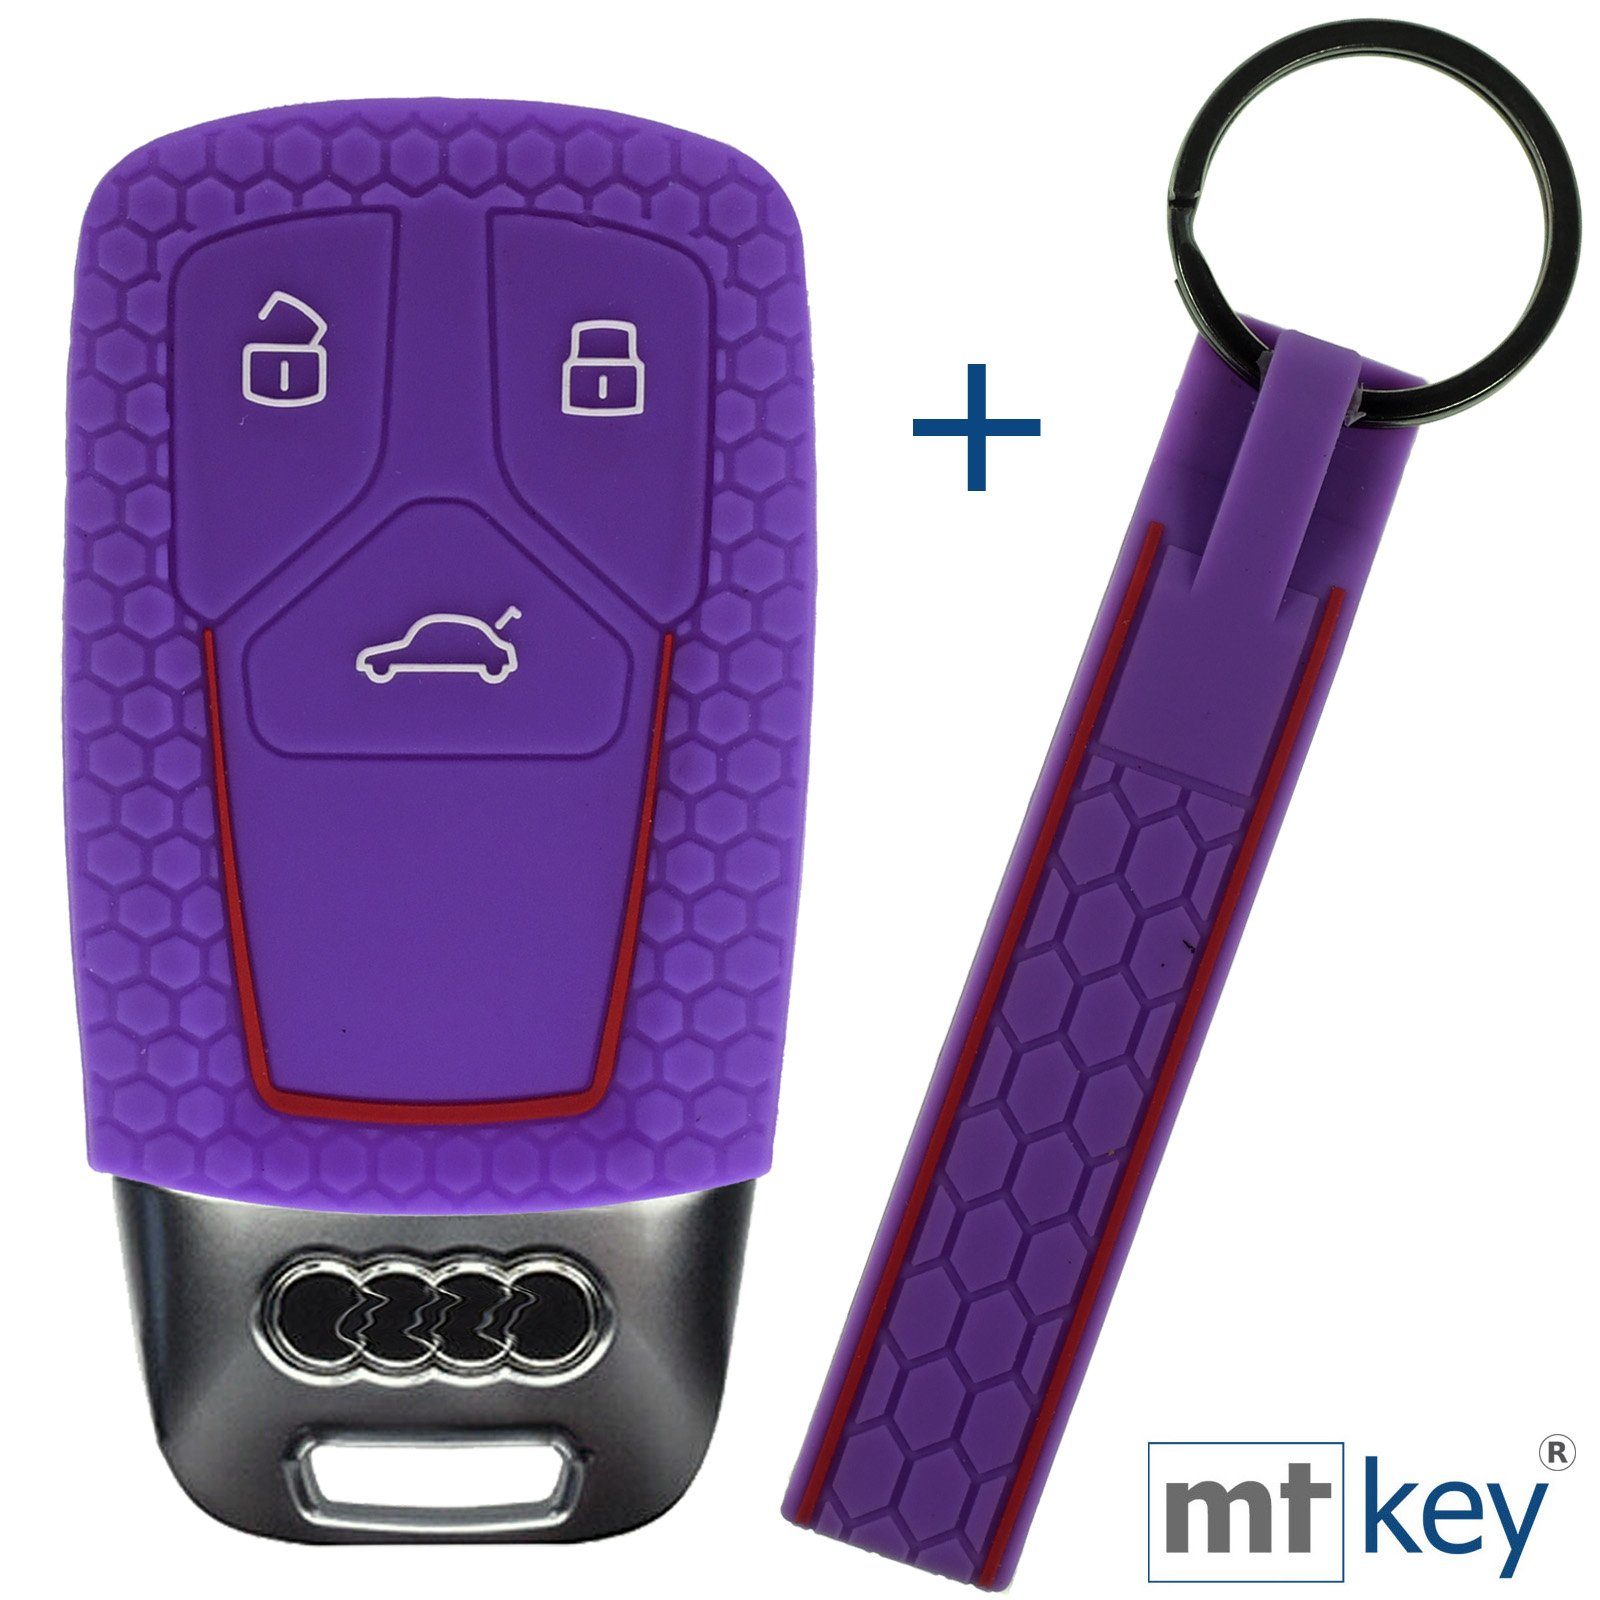 mt-key Schlüsseltasche Autoschlüssel Silikon Schutzhülle im Wabe Design Lila + Schlüsselband, für Audi A4 A5 A6 A7 TT Q2 Q5 Q7 A8 Q8 3 Tasten KEYLESS SMARTKEY